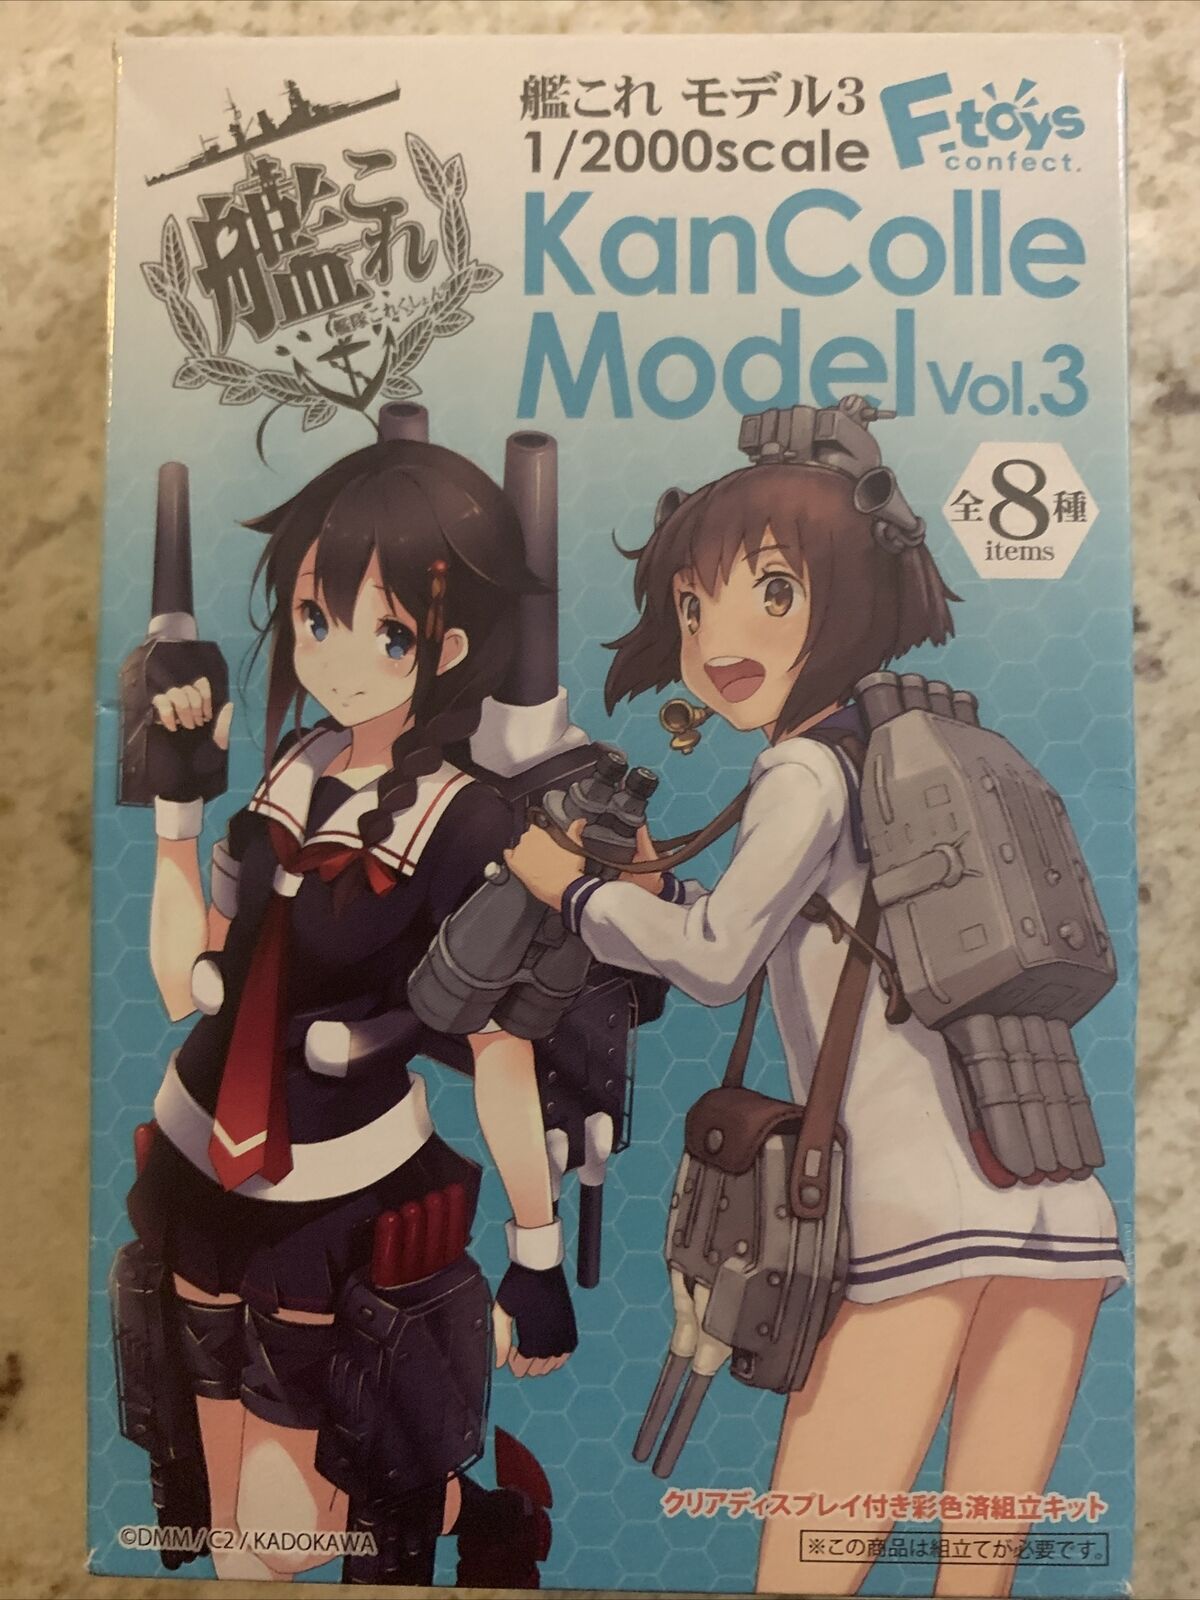 Kancolle model vol 3 1/2000 Scale Plastic Model Set